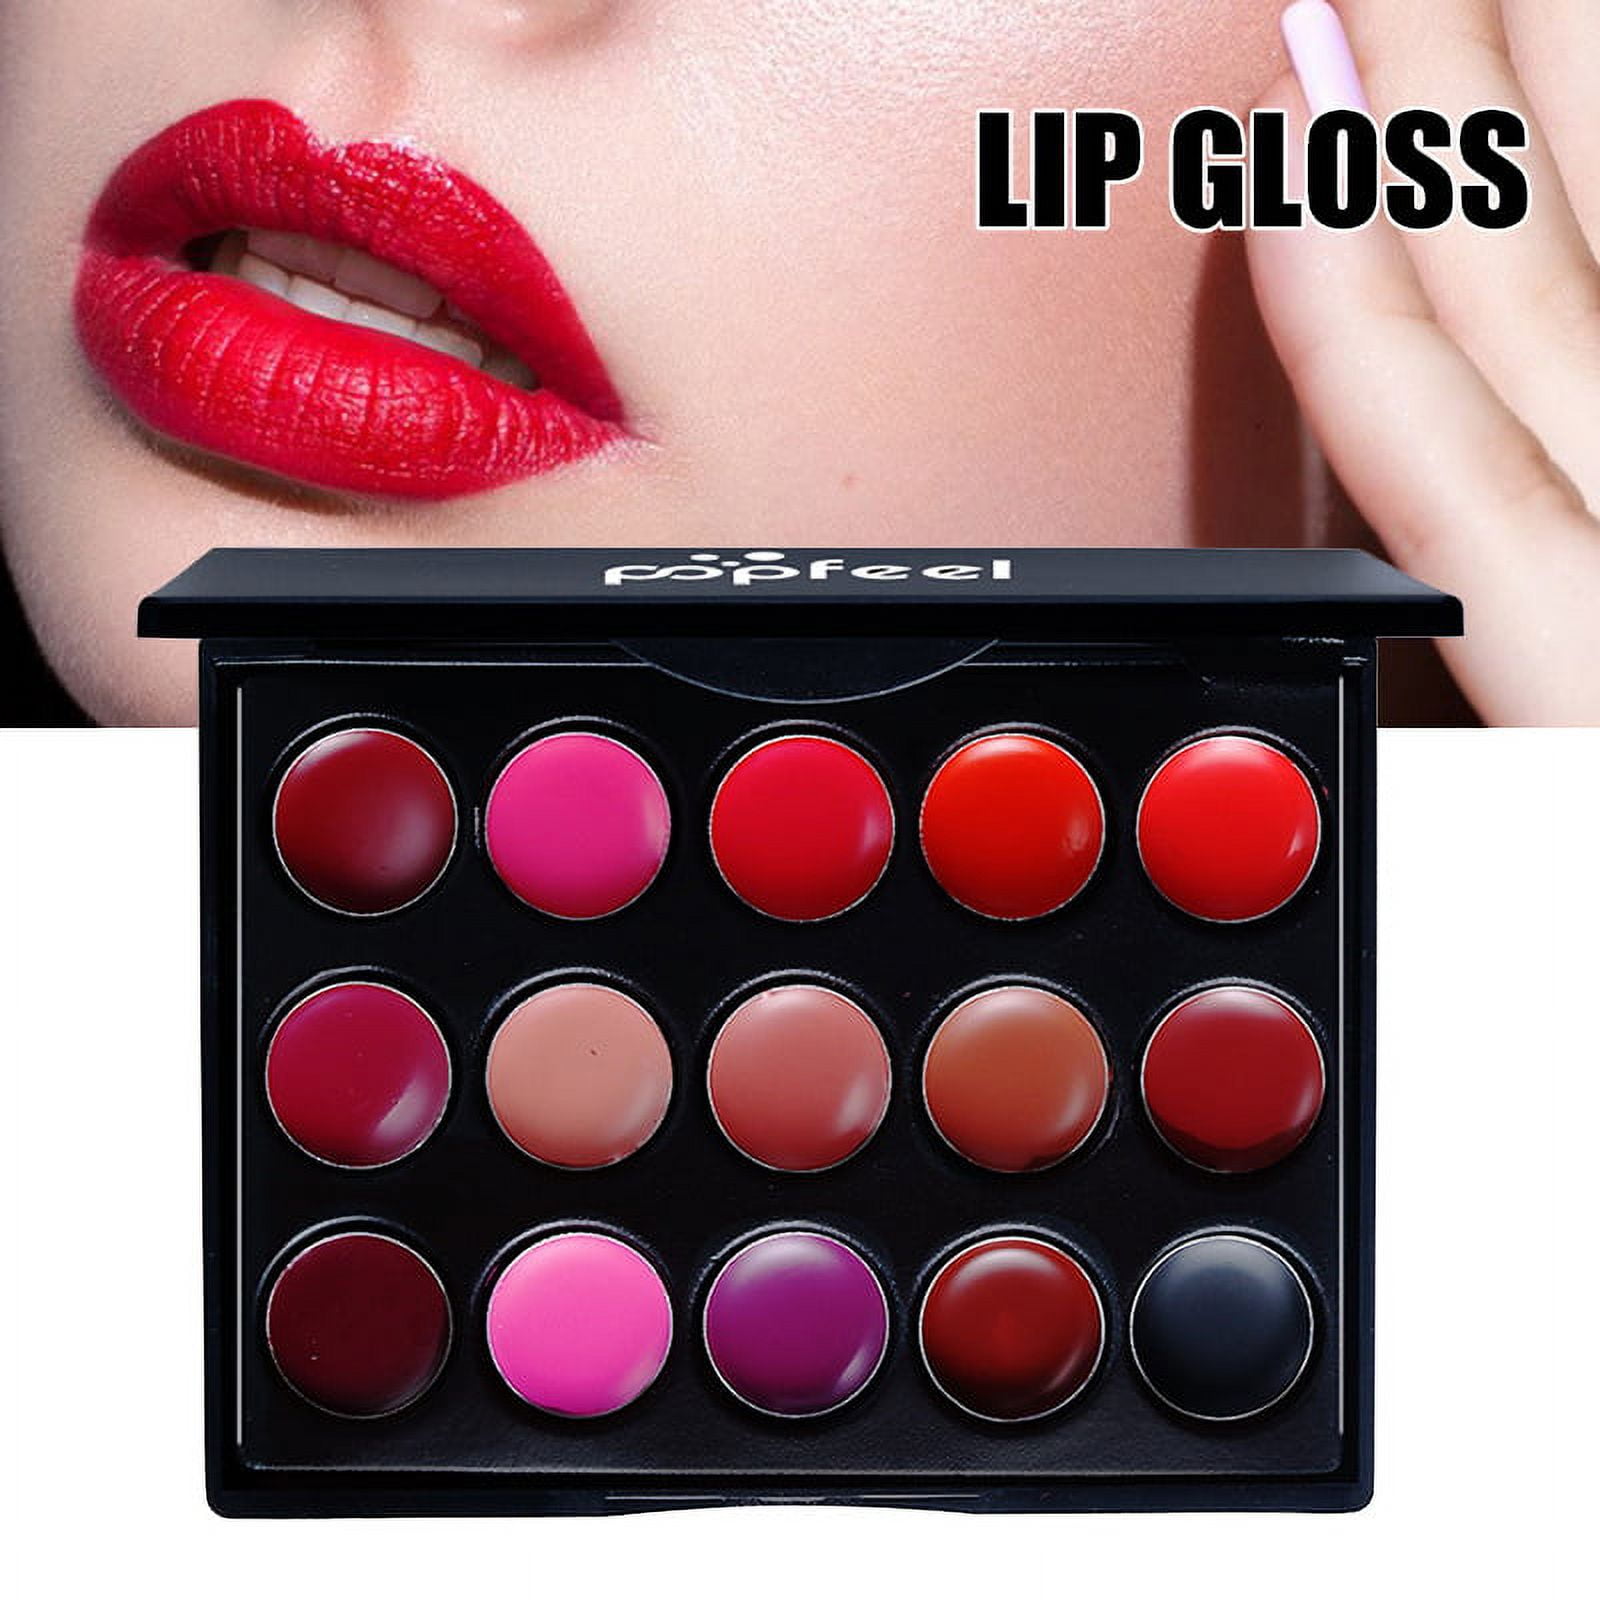 SLAM Beauty Cosmetic 15-Color Lipstick Palette Kit